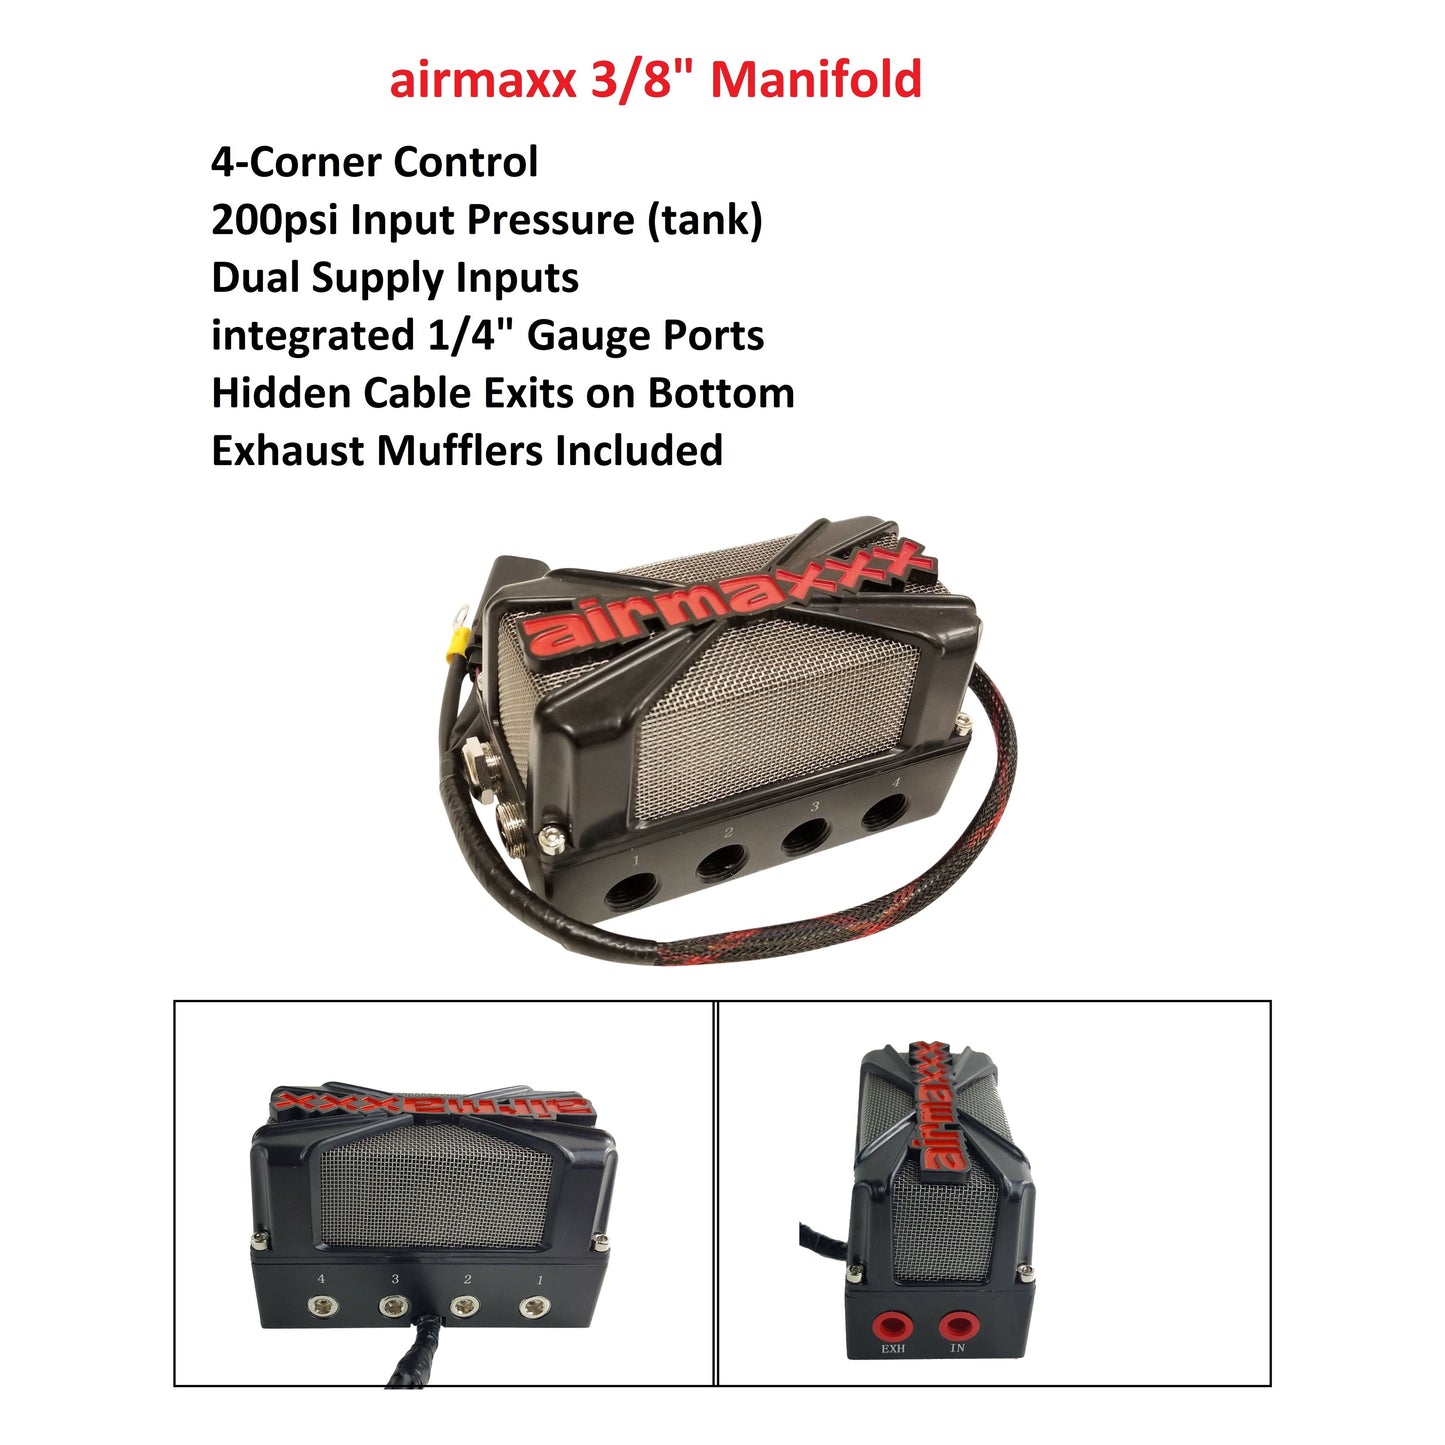 3/8" airmaxxx X4 Manifold Air Suspension Valve X7 Switch Box Controller